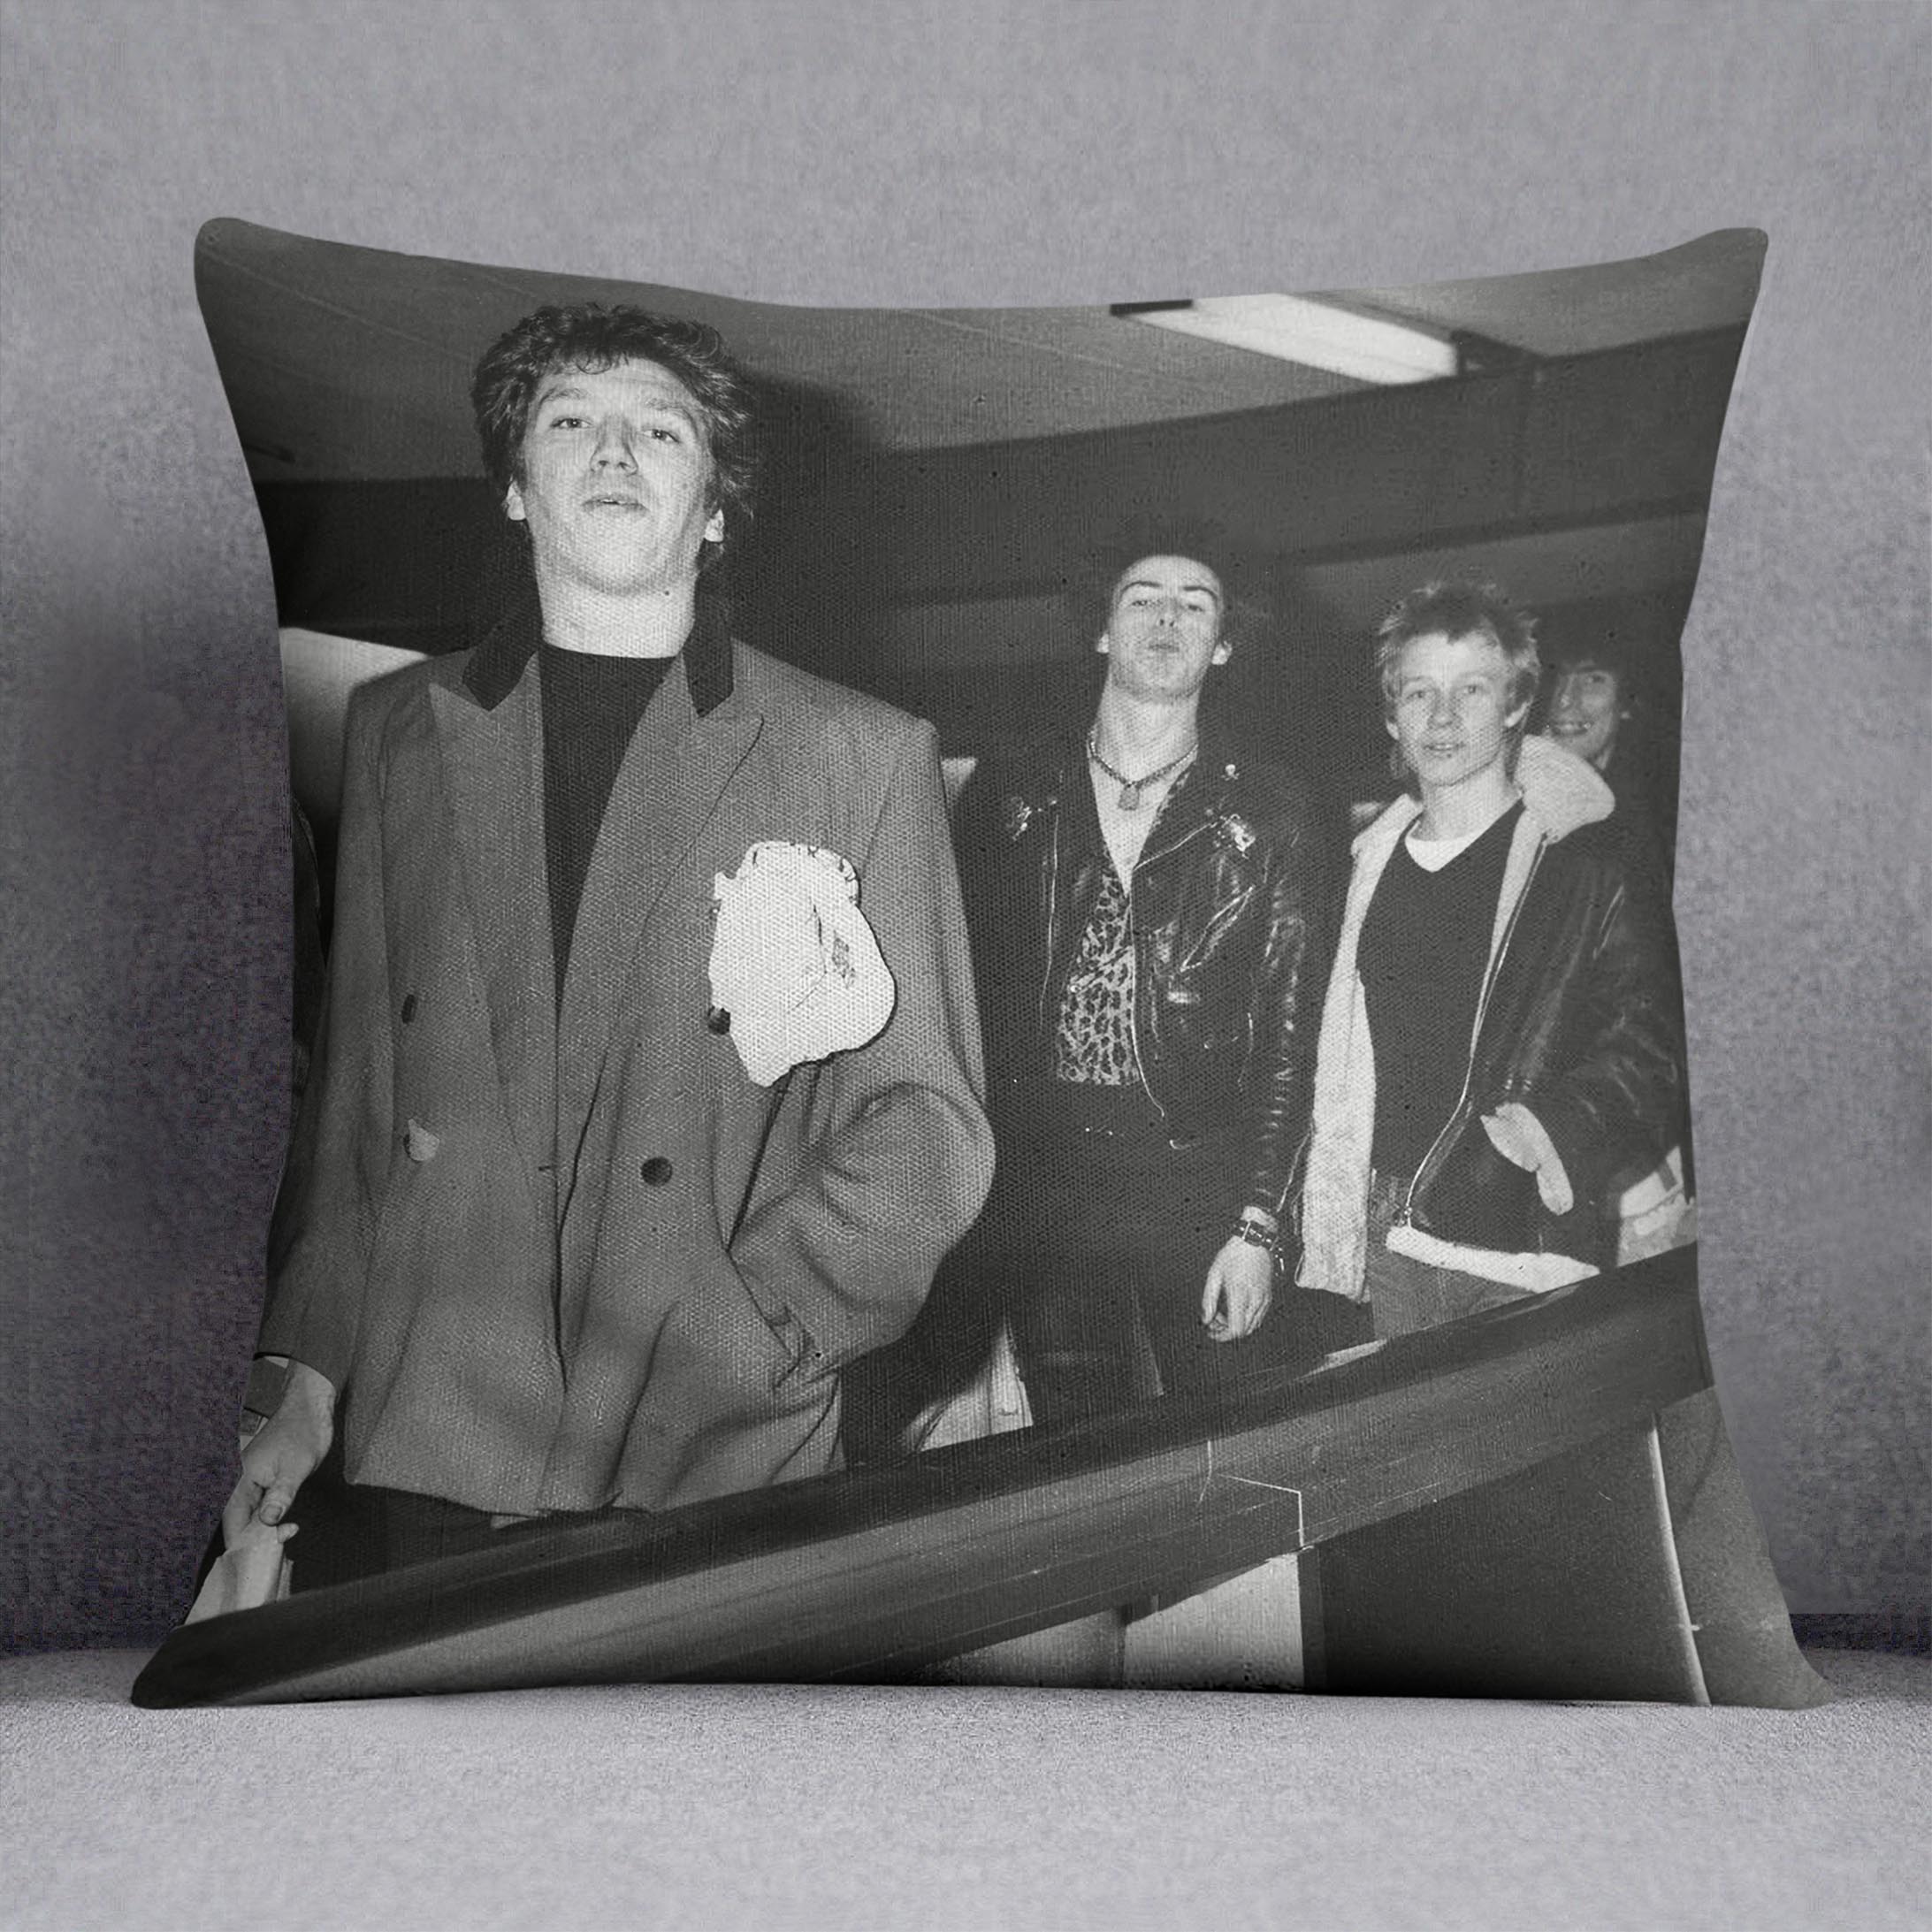 Sex Pistols departing Cushion